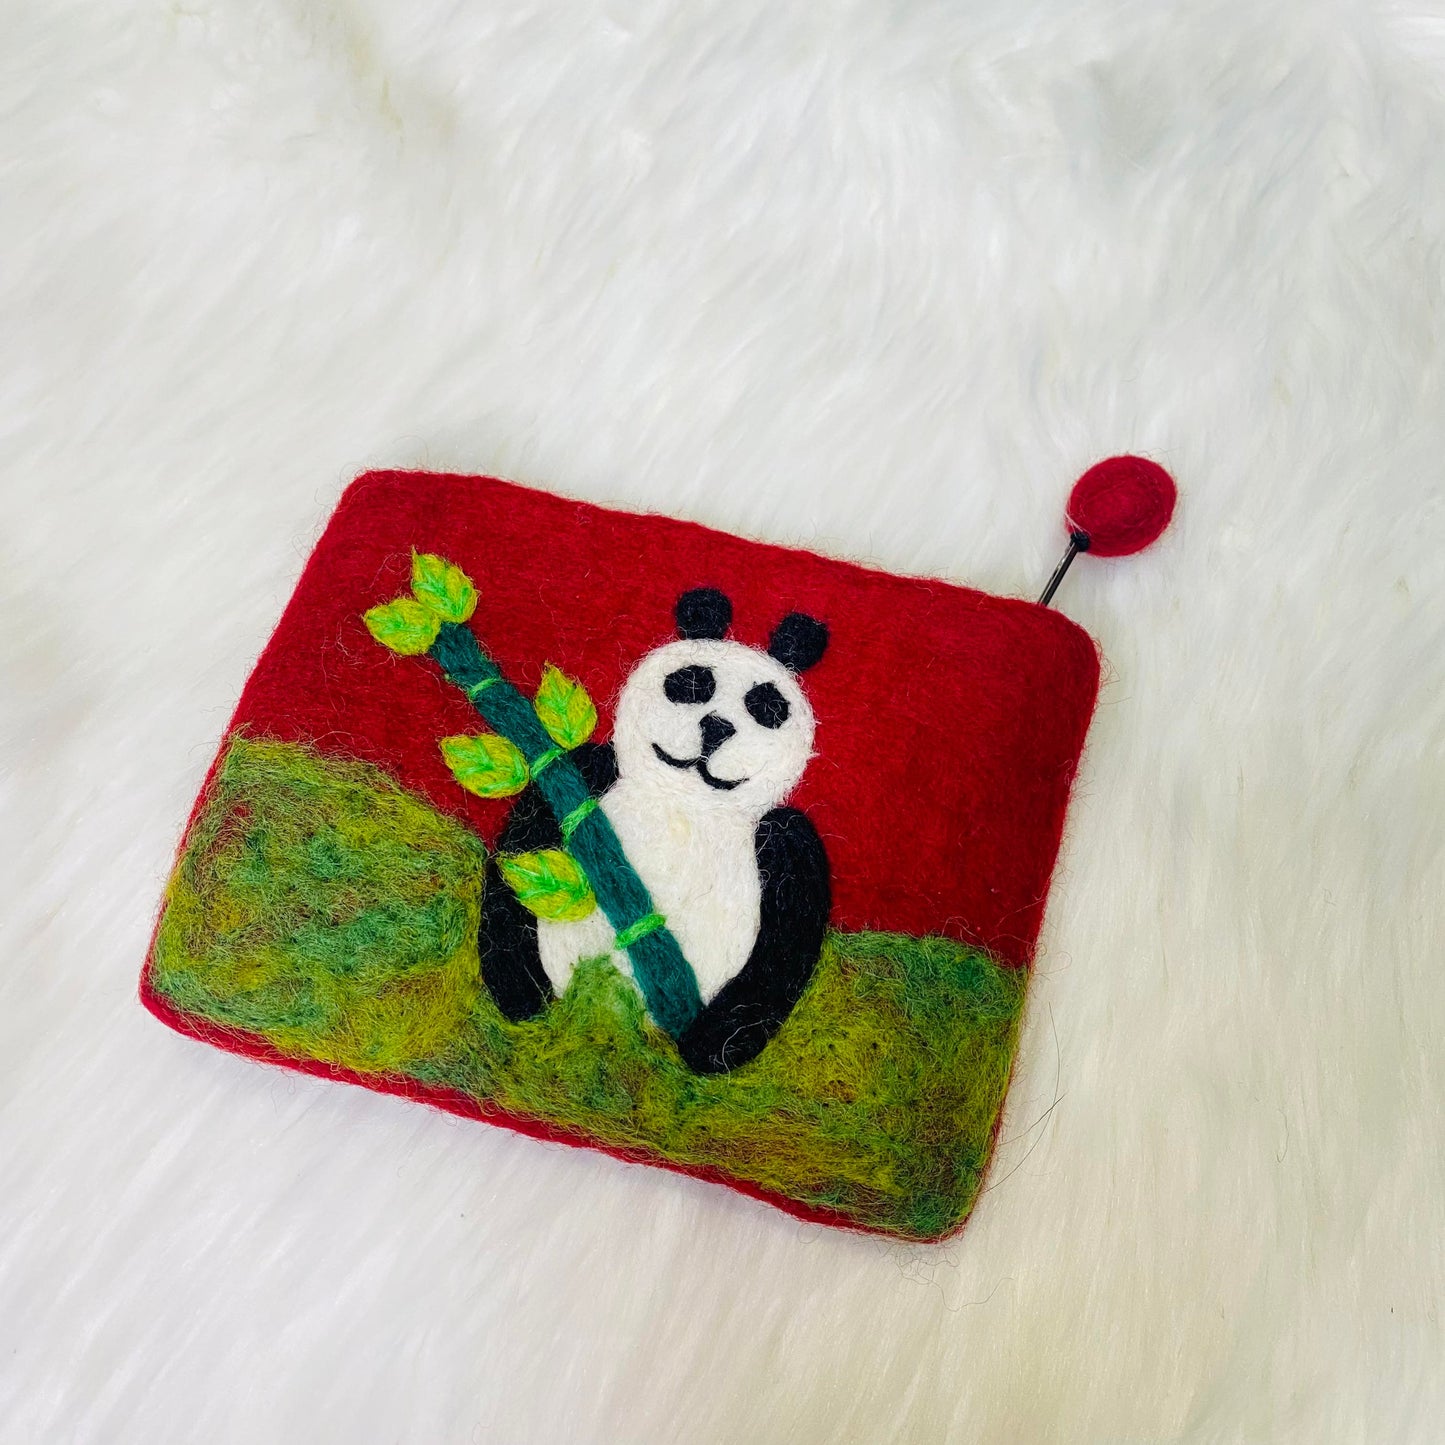 Handmade Embroidered Panda Theme Purse